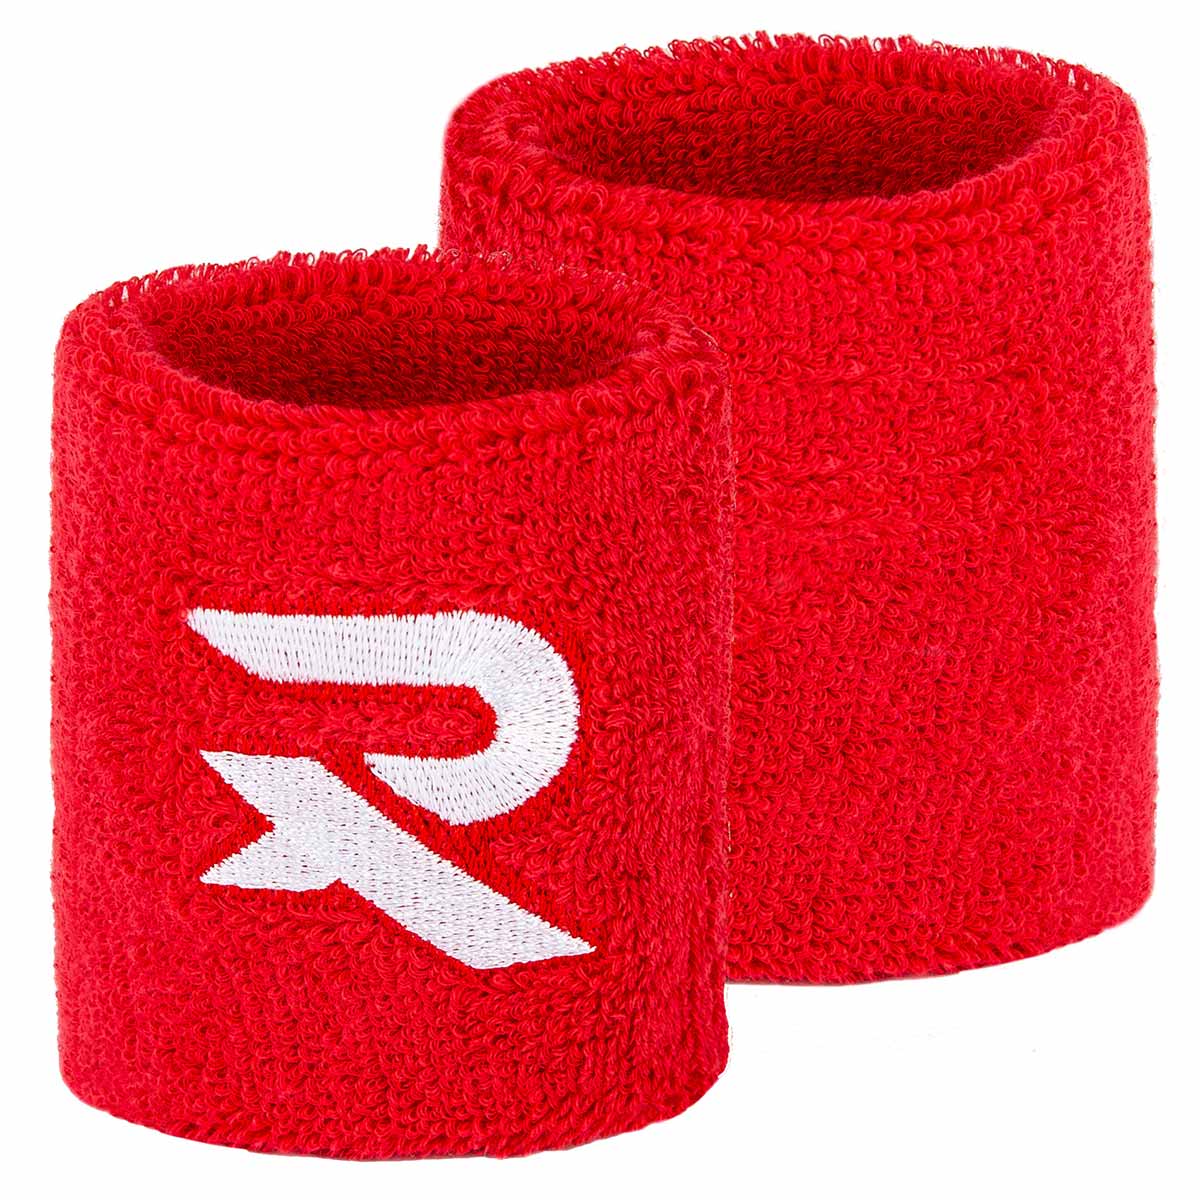 Raquex wristbands in red